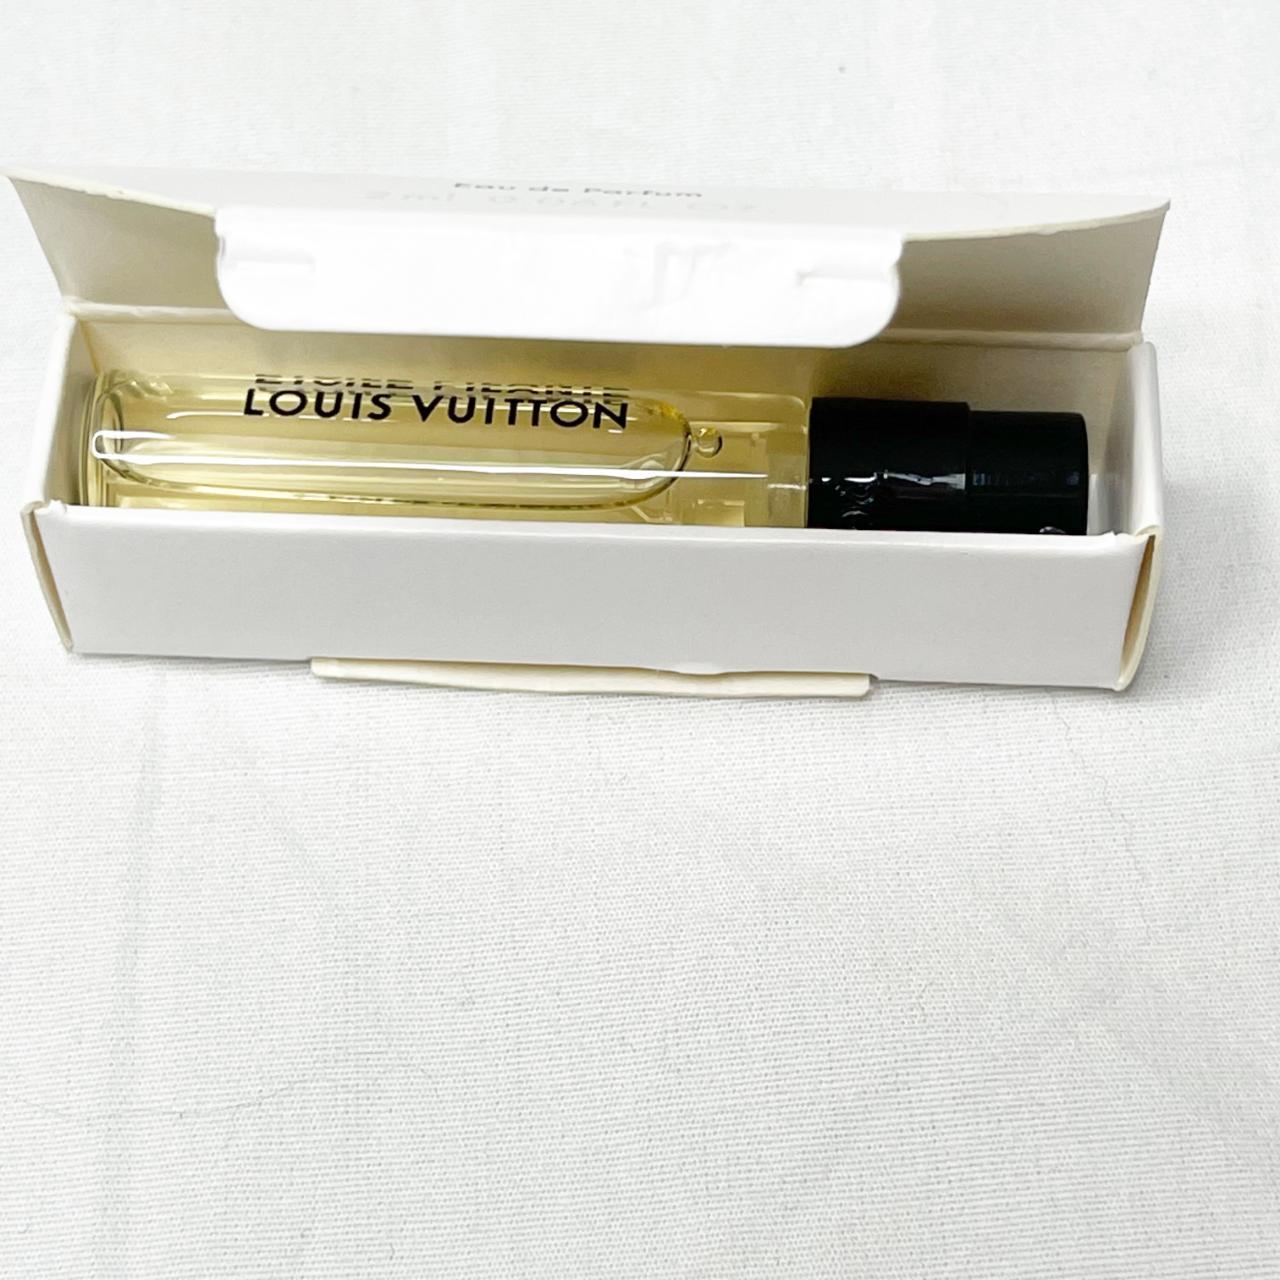 Louis Vuitton, Accessories, Louis Vuitton Fragrance Sample 2ml